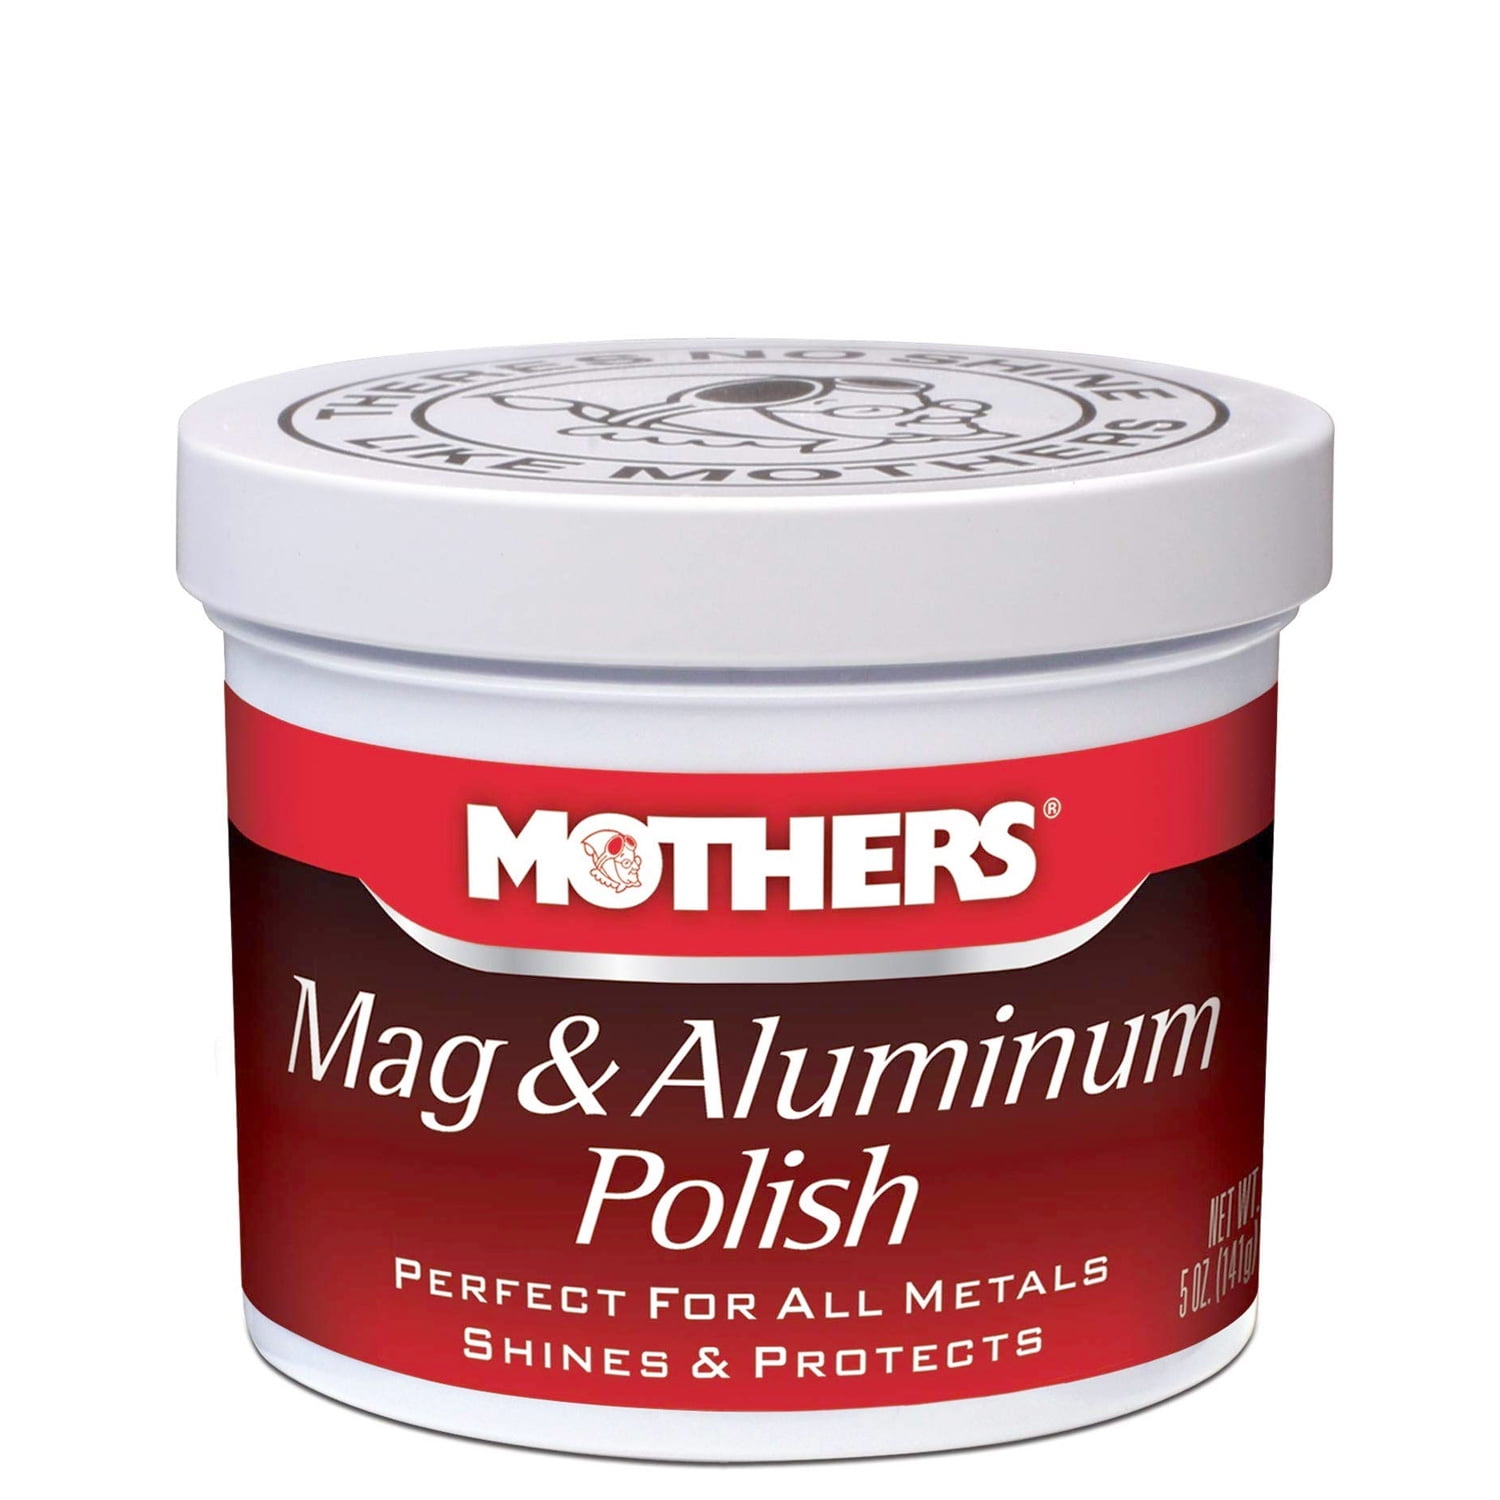 Mothers Mag & Aluminum Polish